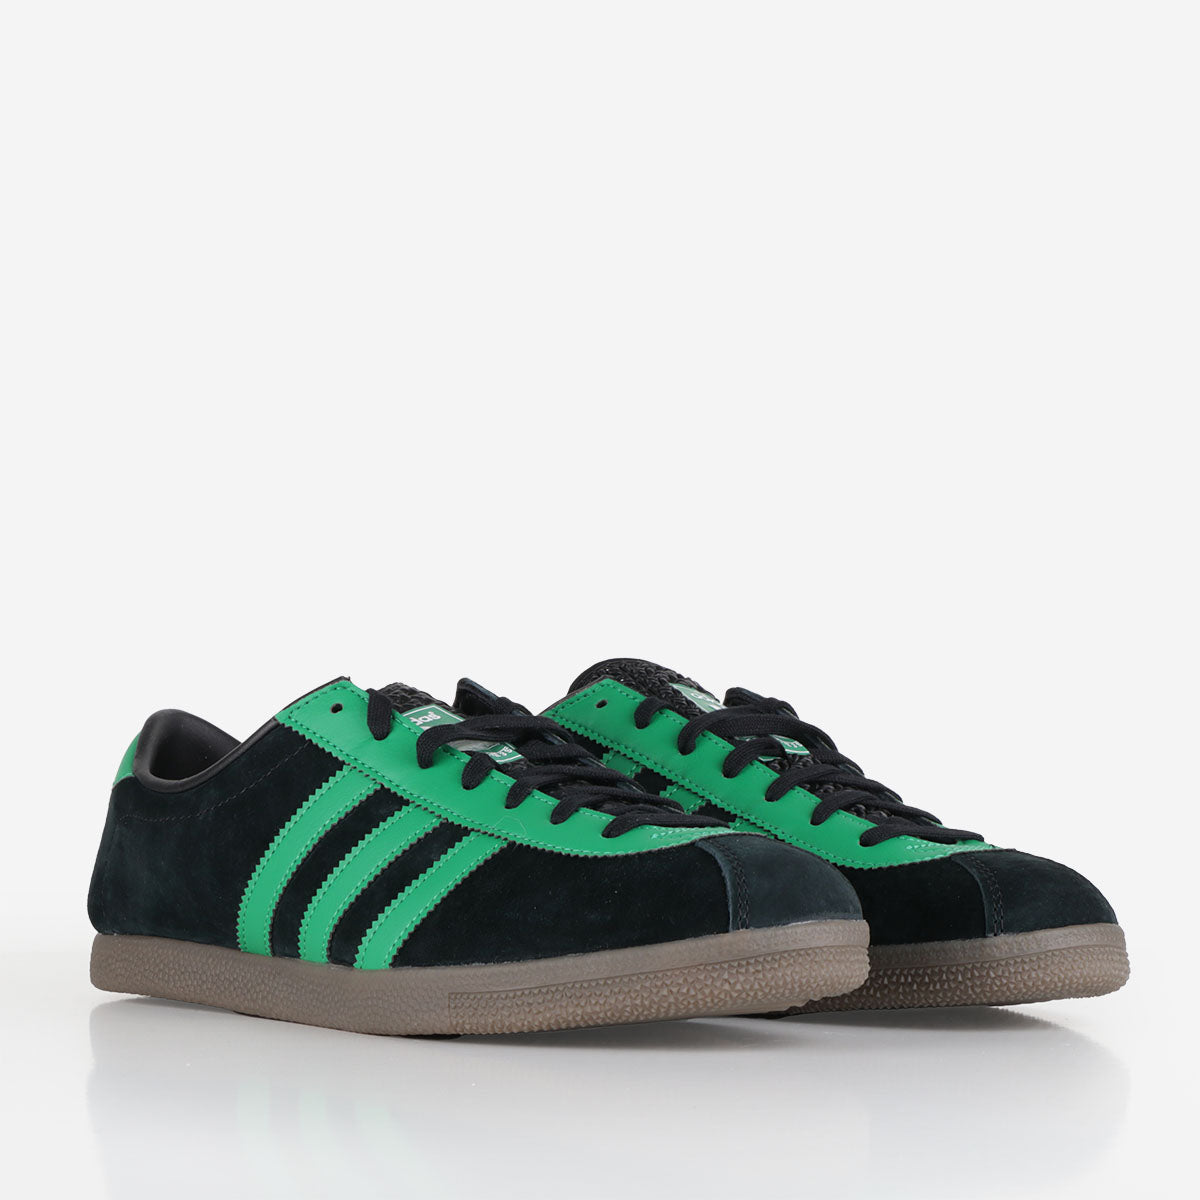 Adidas Originals London Shoes - Core Black/Green/Gum 5 – Urban